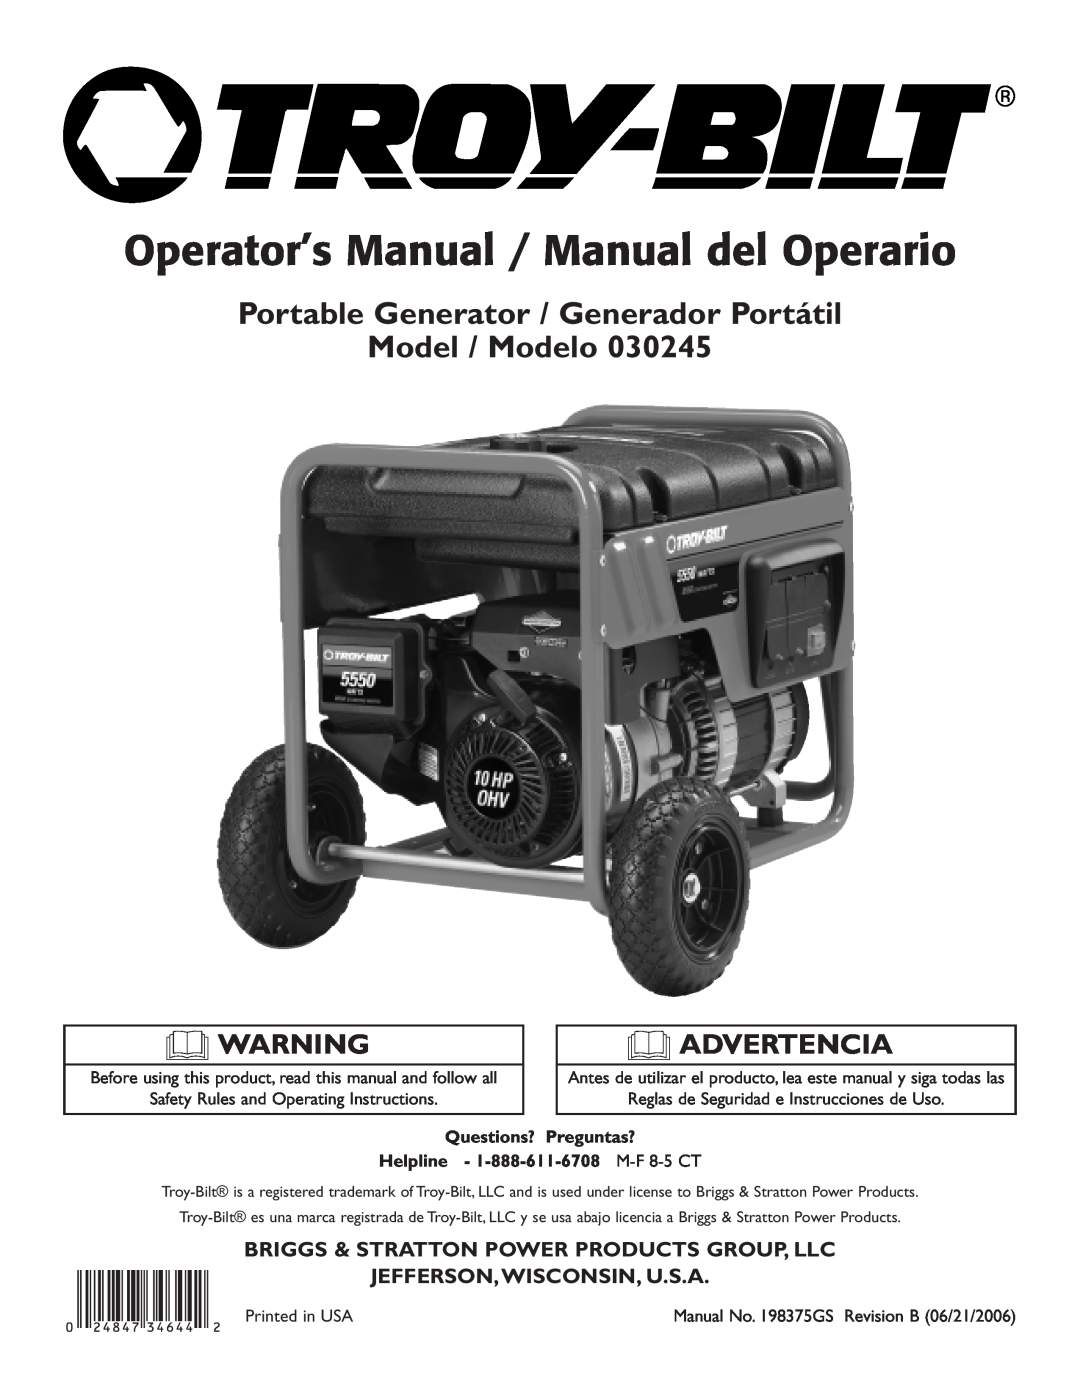 Troy-Bilt 030245 manual Portable Generator / Generador Portátil, Model / Modelo, Jefferson,Wisconsin, U.S.A, Advertencia 